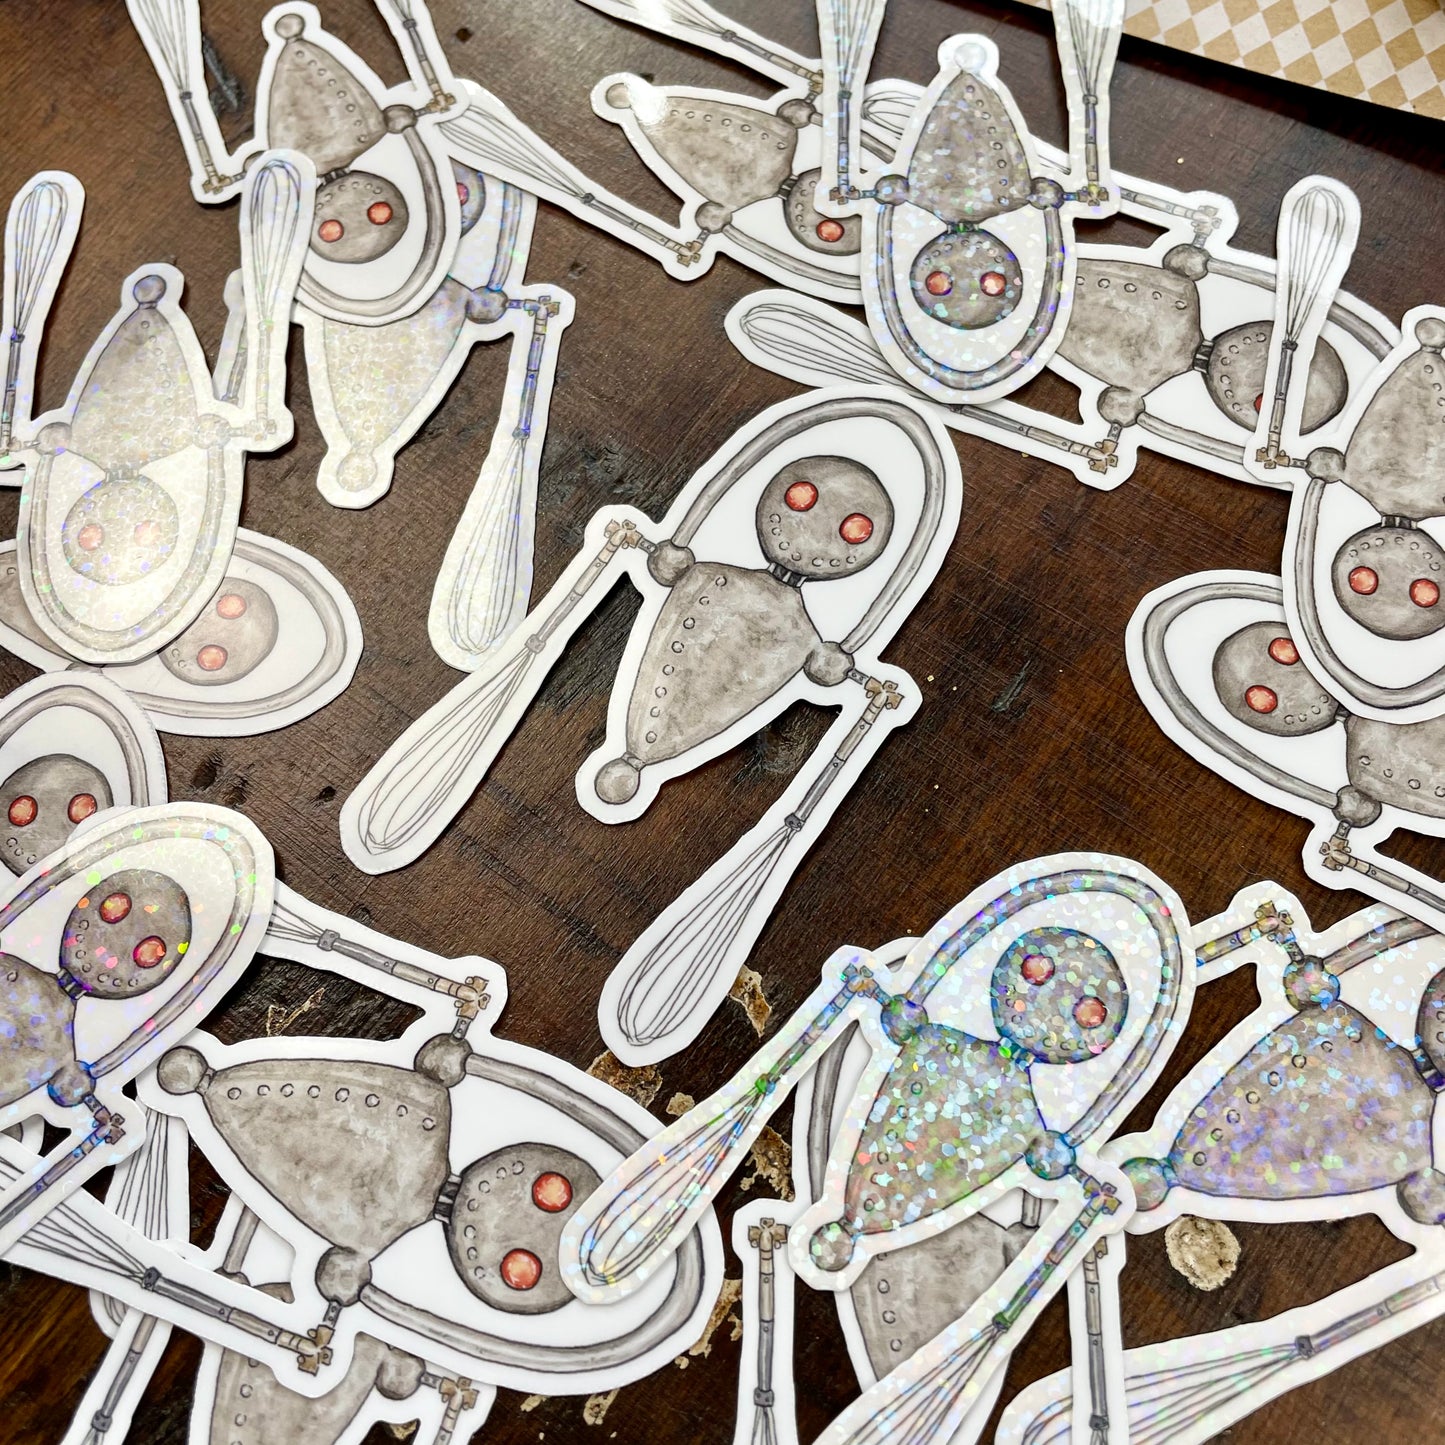 Edward Scissorhands Whisk Robot Sticker (Obscure Objects series)